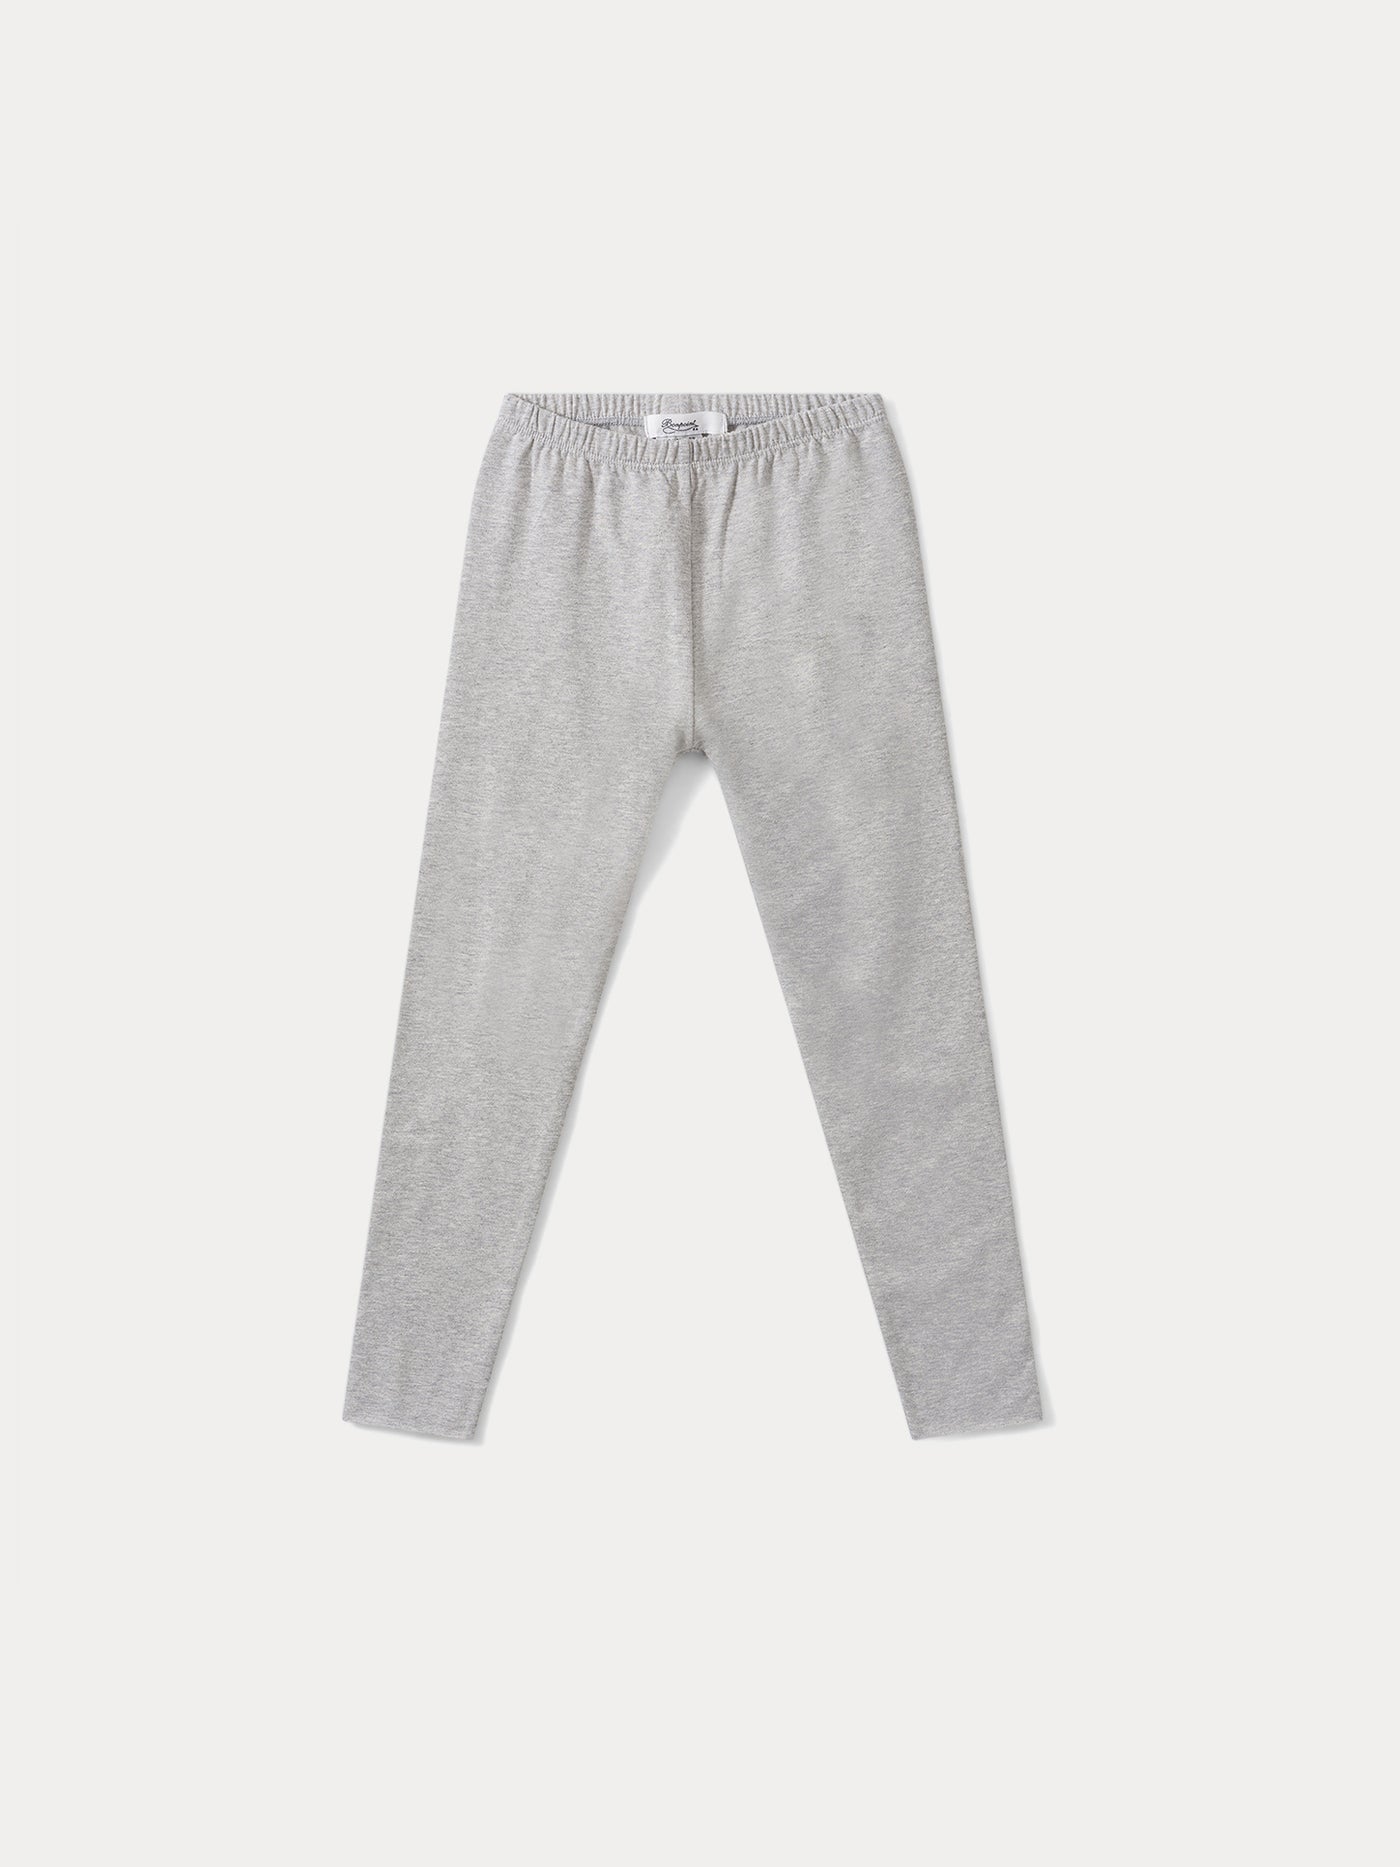 Plain leggings heathered gray